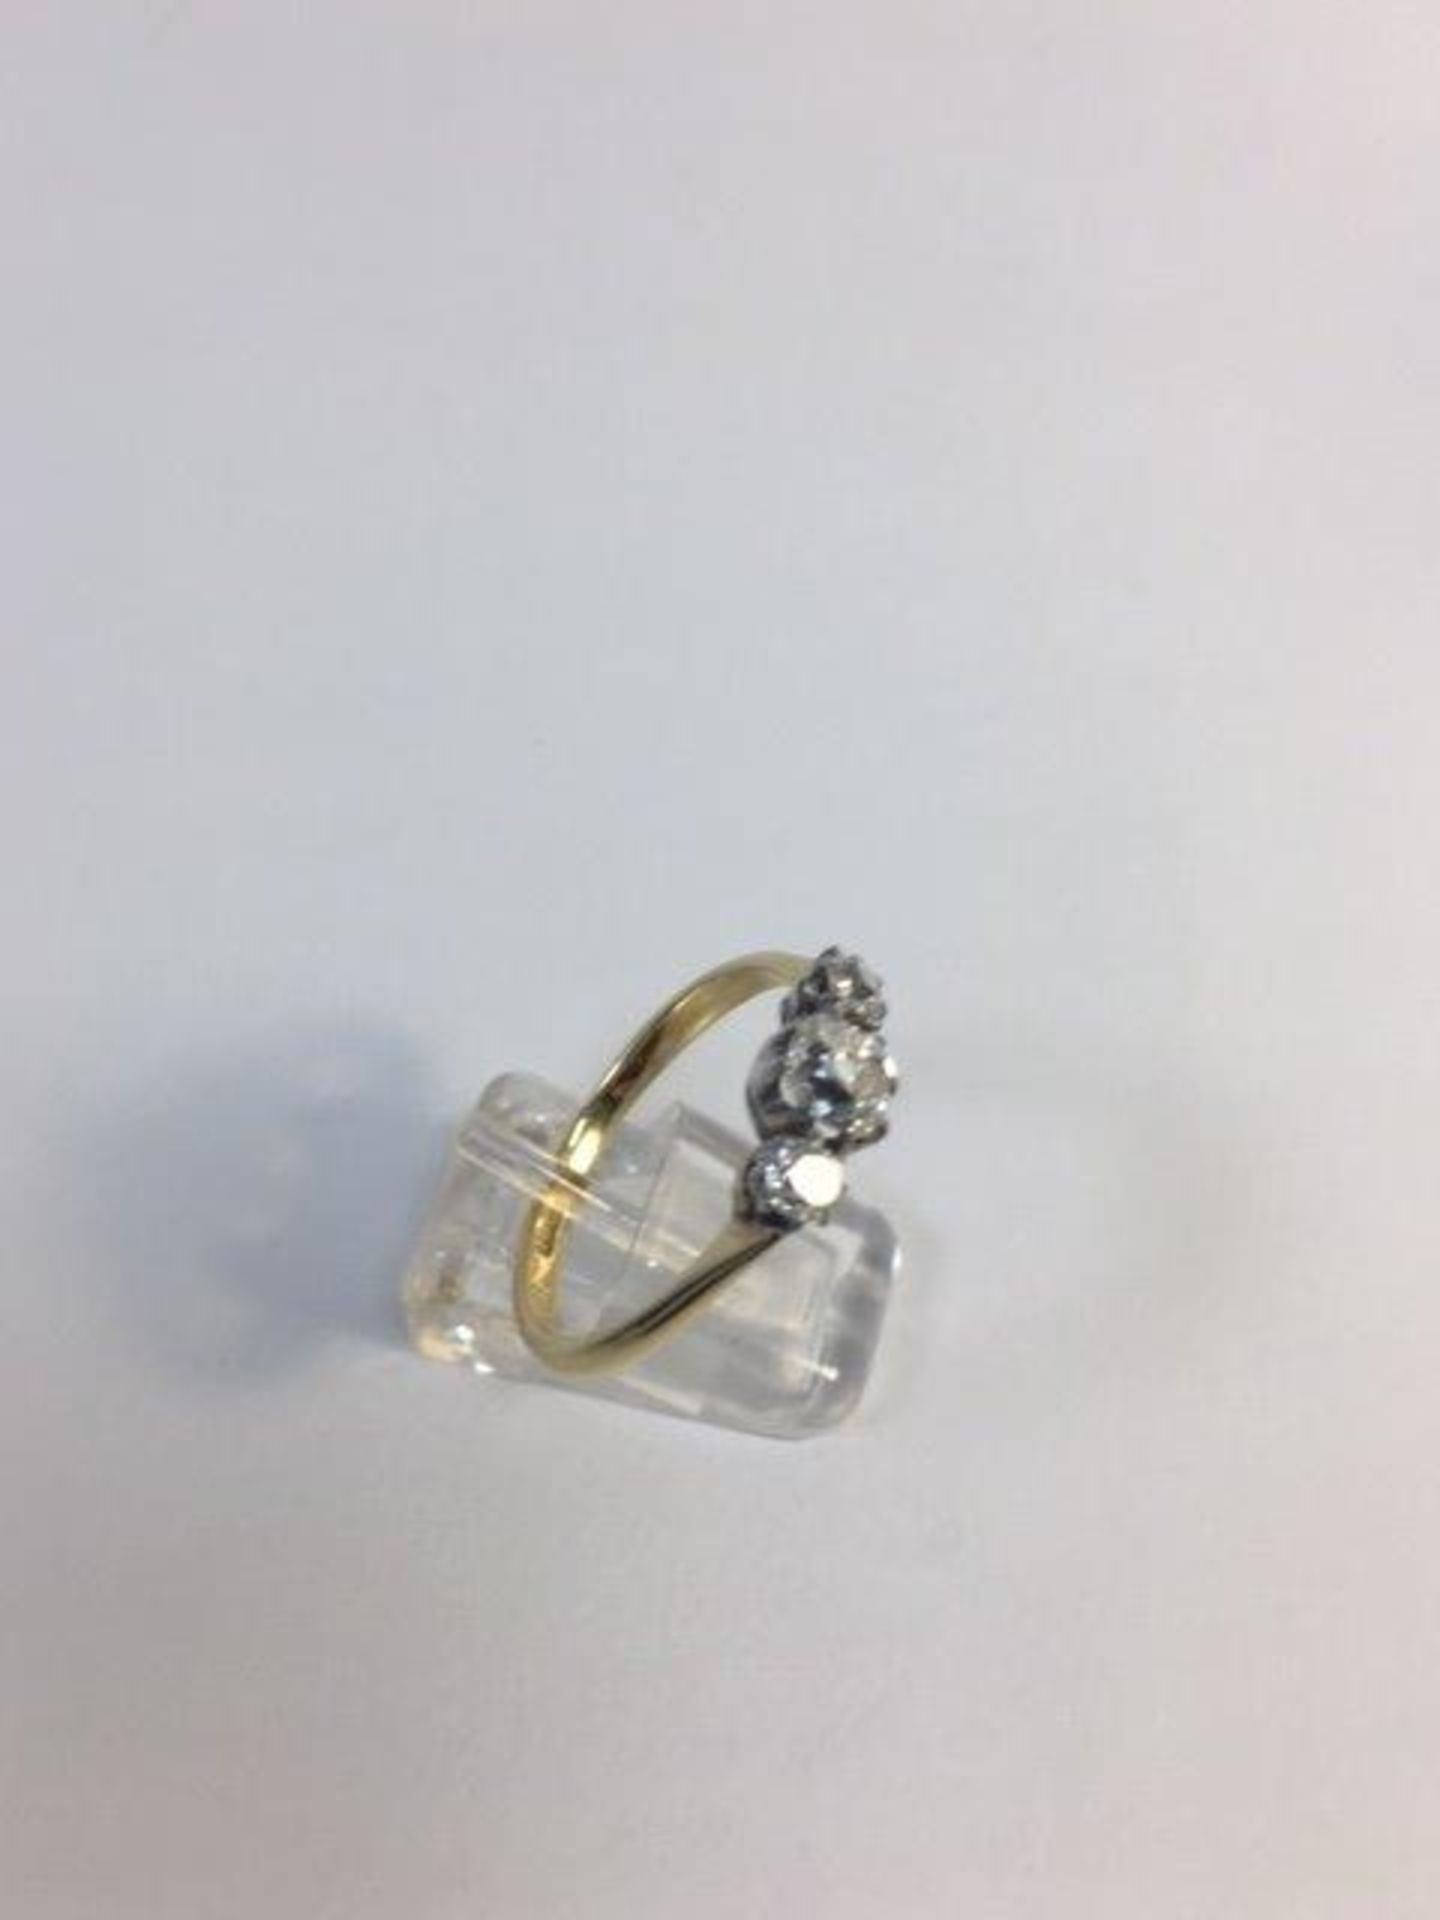 18ct 3 stone old cut diamond ring - Image 2 of 3